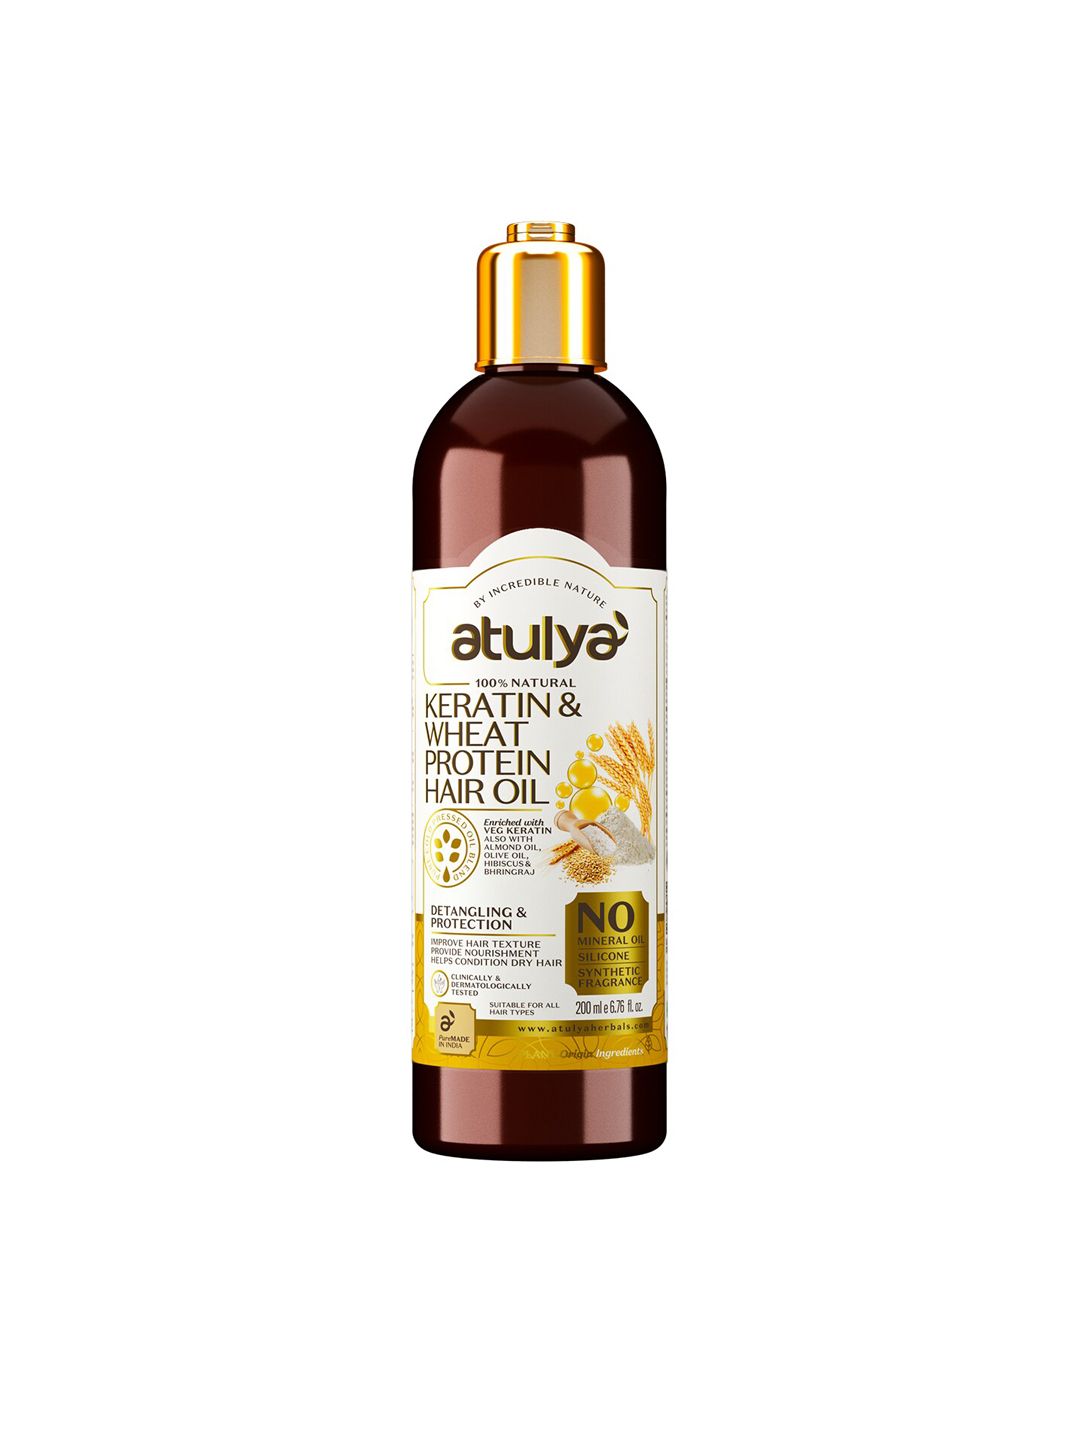 Atulya Keratin & Wheat Protein Hair Oil 200 ml Price in India